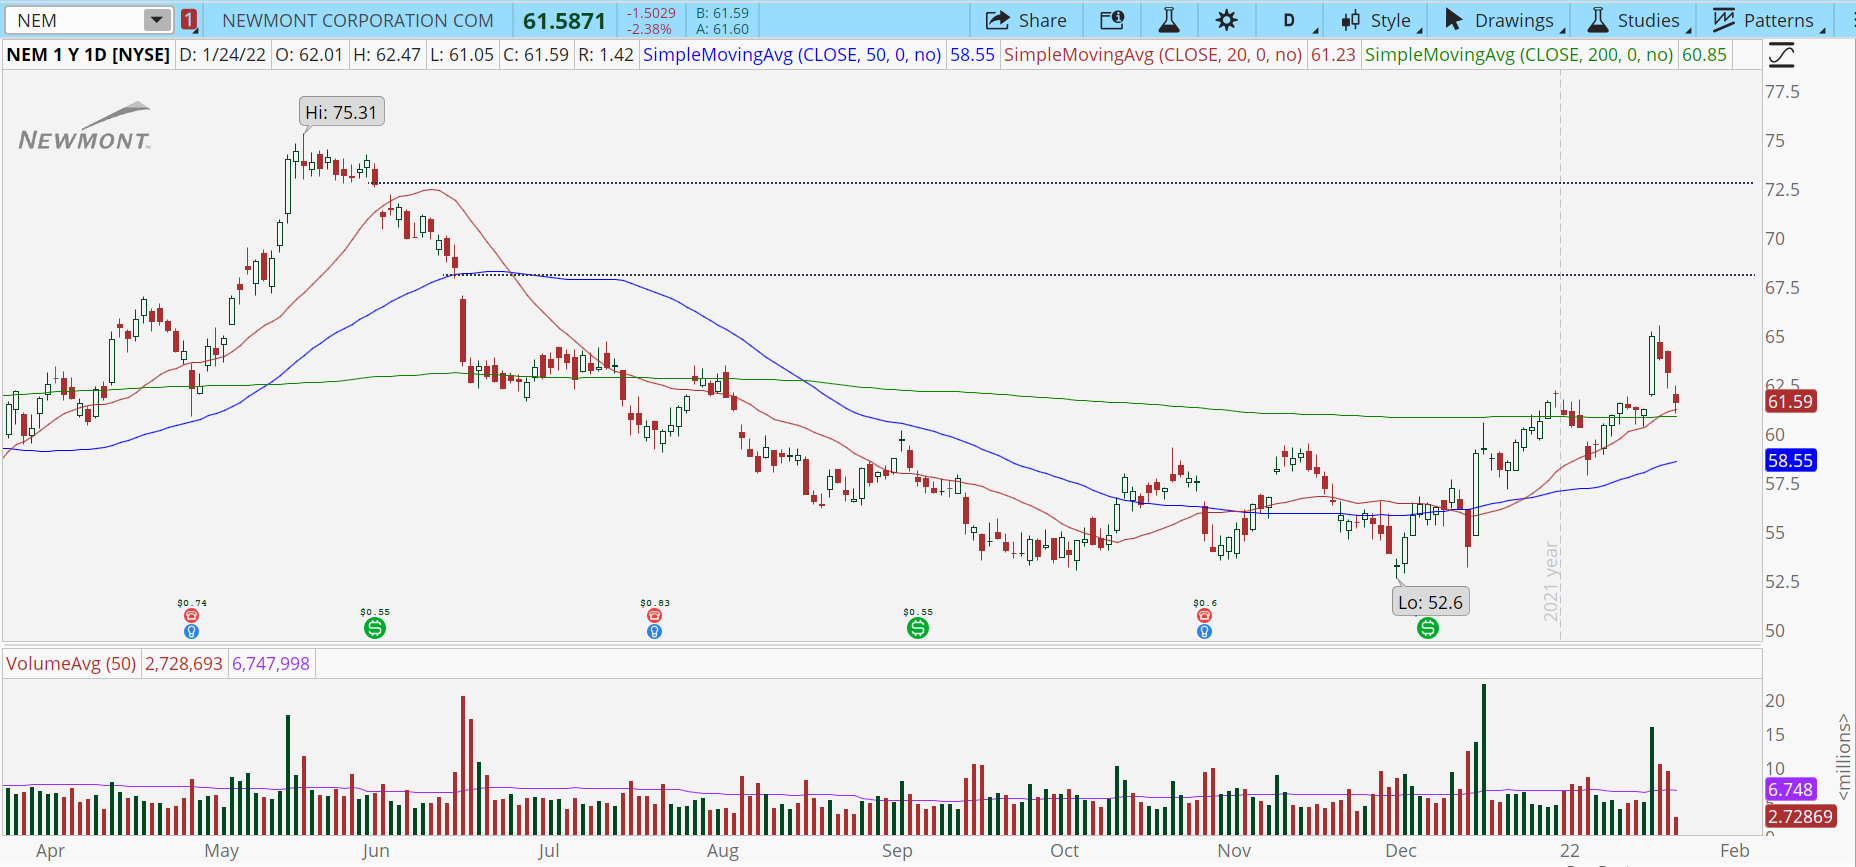 Newmont Mining (NEM) stock chart with bull retracement pattern.